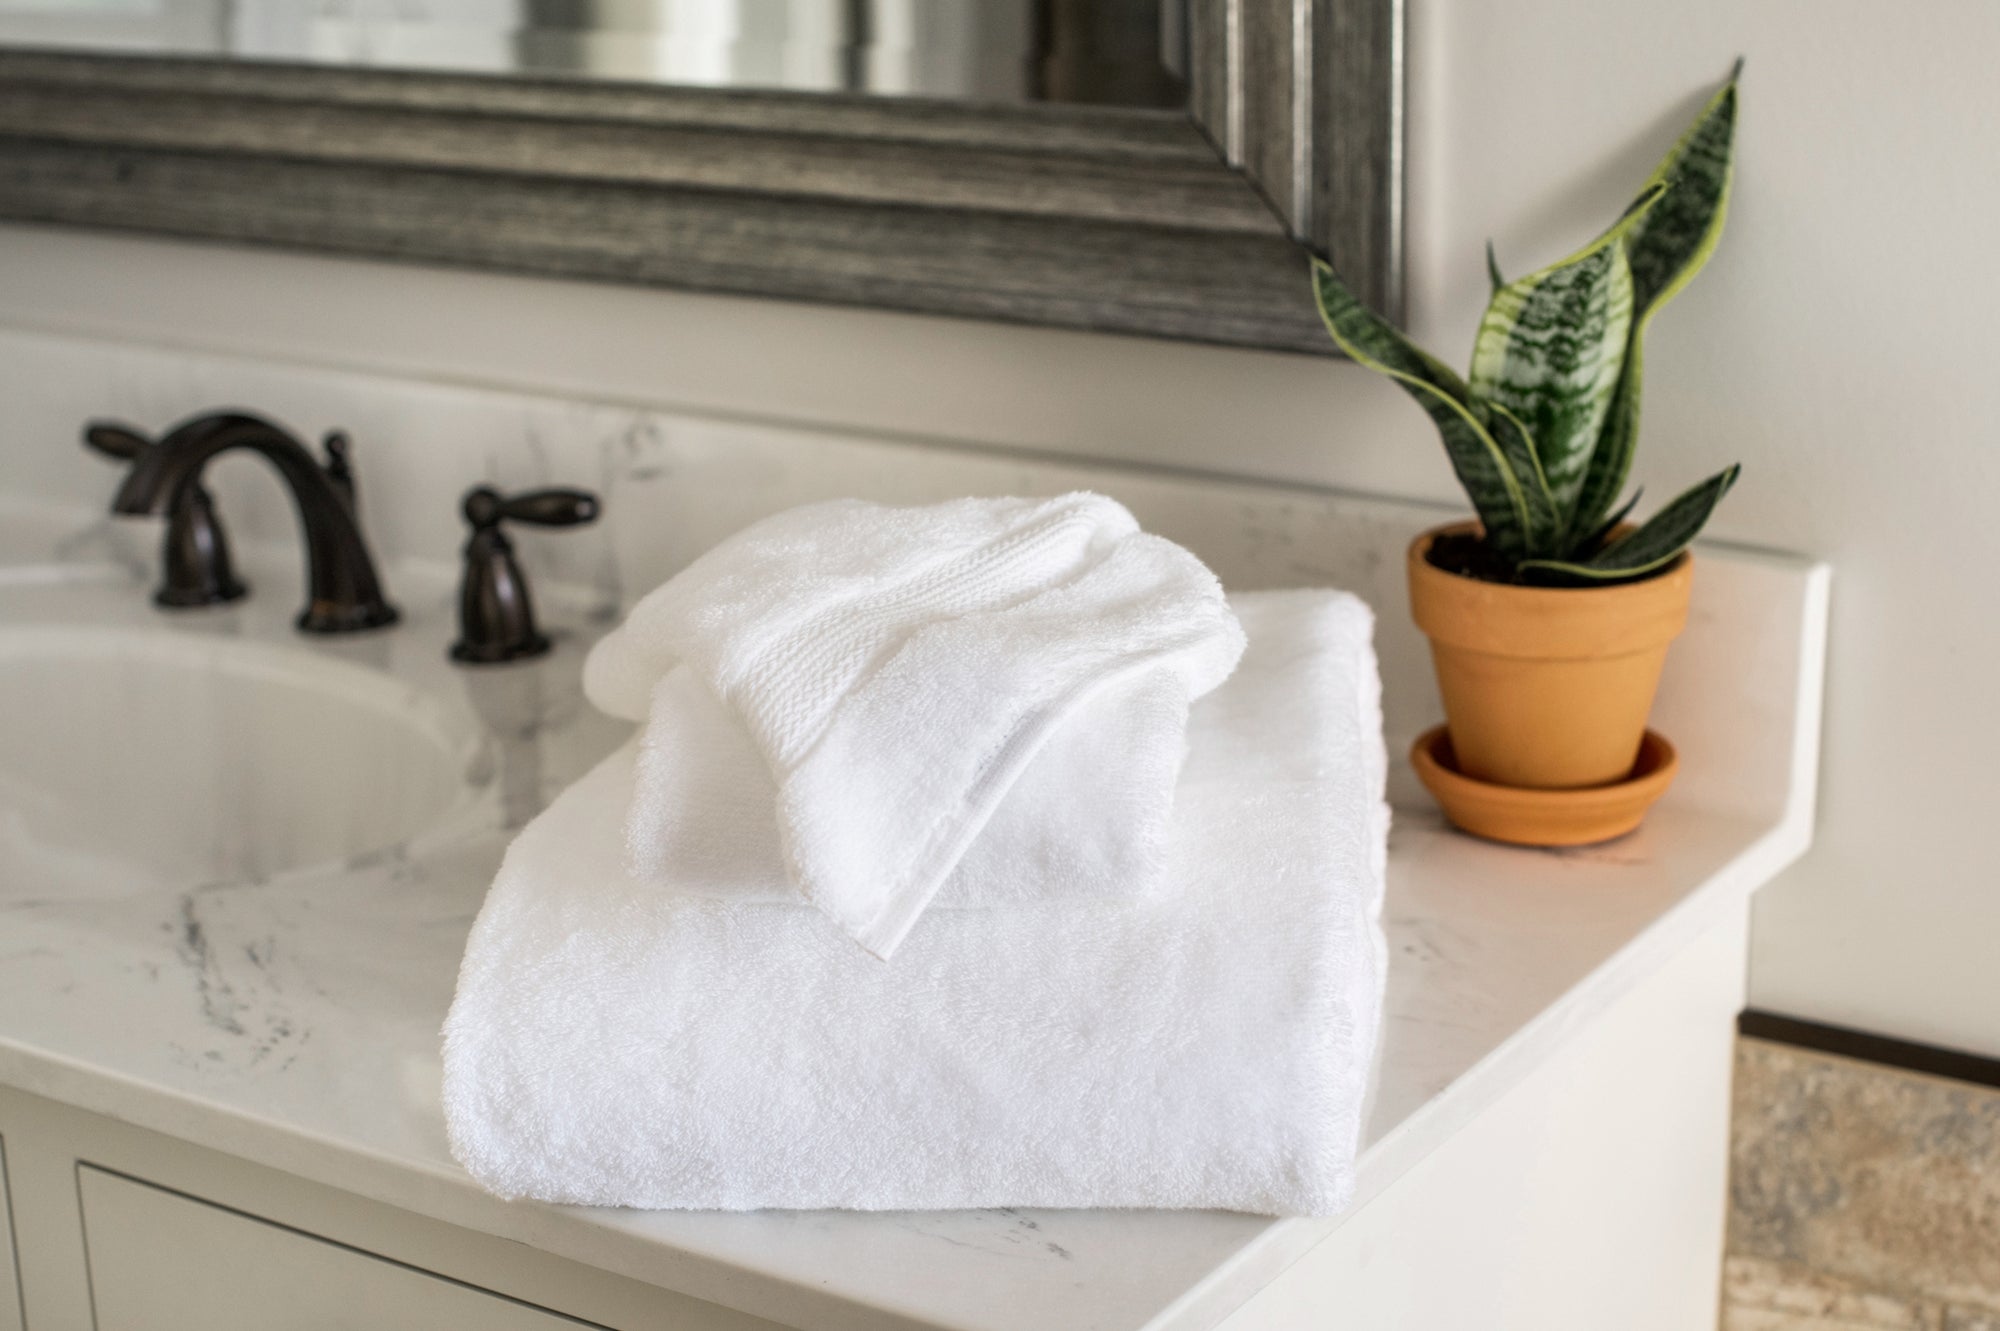 Bath Towel Guide, How to Choose Bath Towels